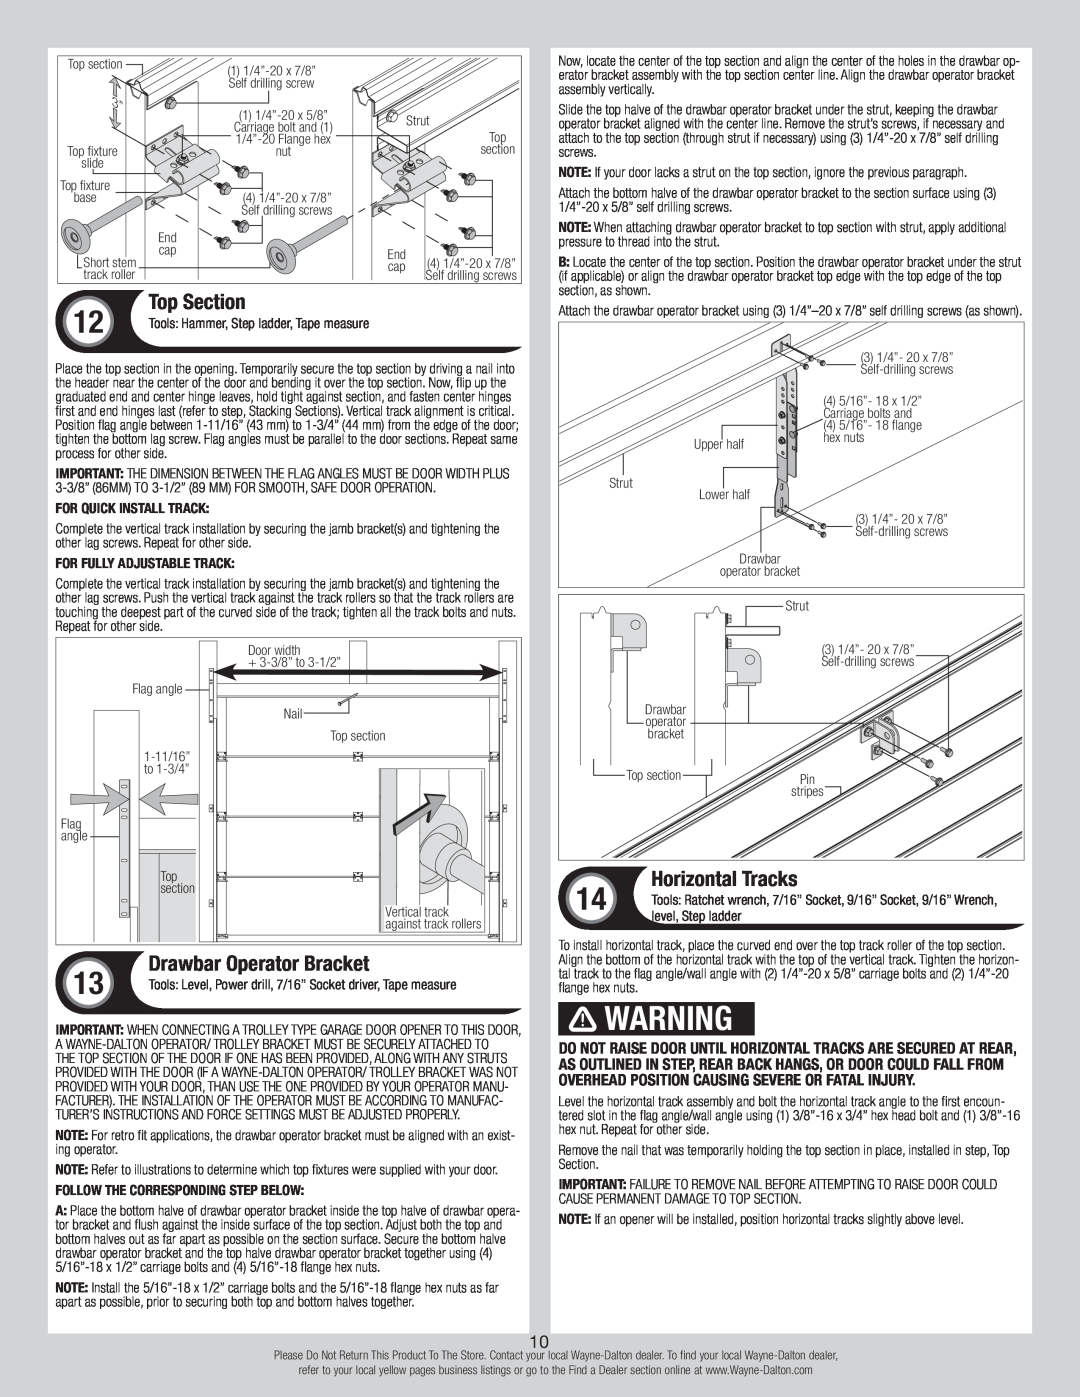 Wayne-Dalton 8300/8500 installation instructions Top Section, Drawbar Operator Bracket, Horizontal Tracks 